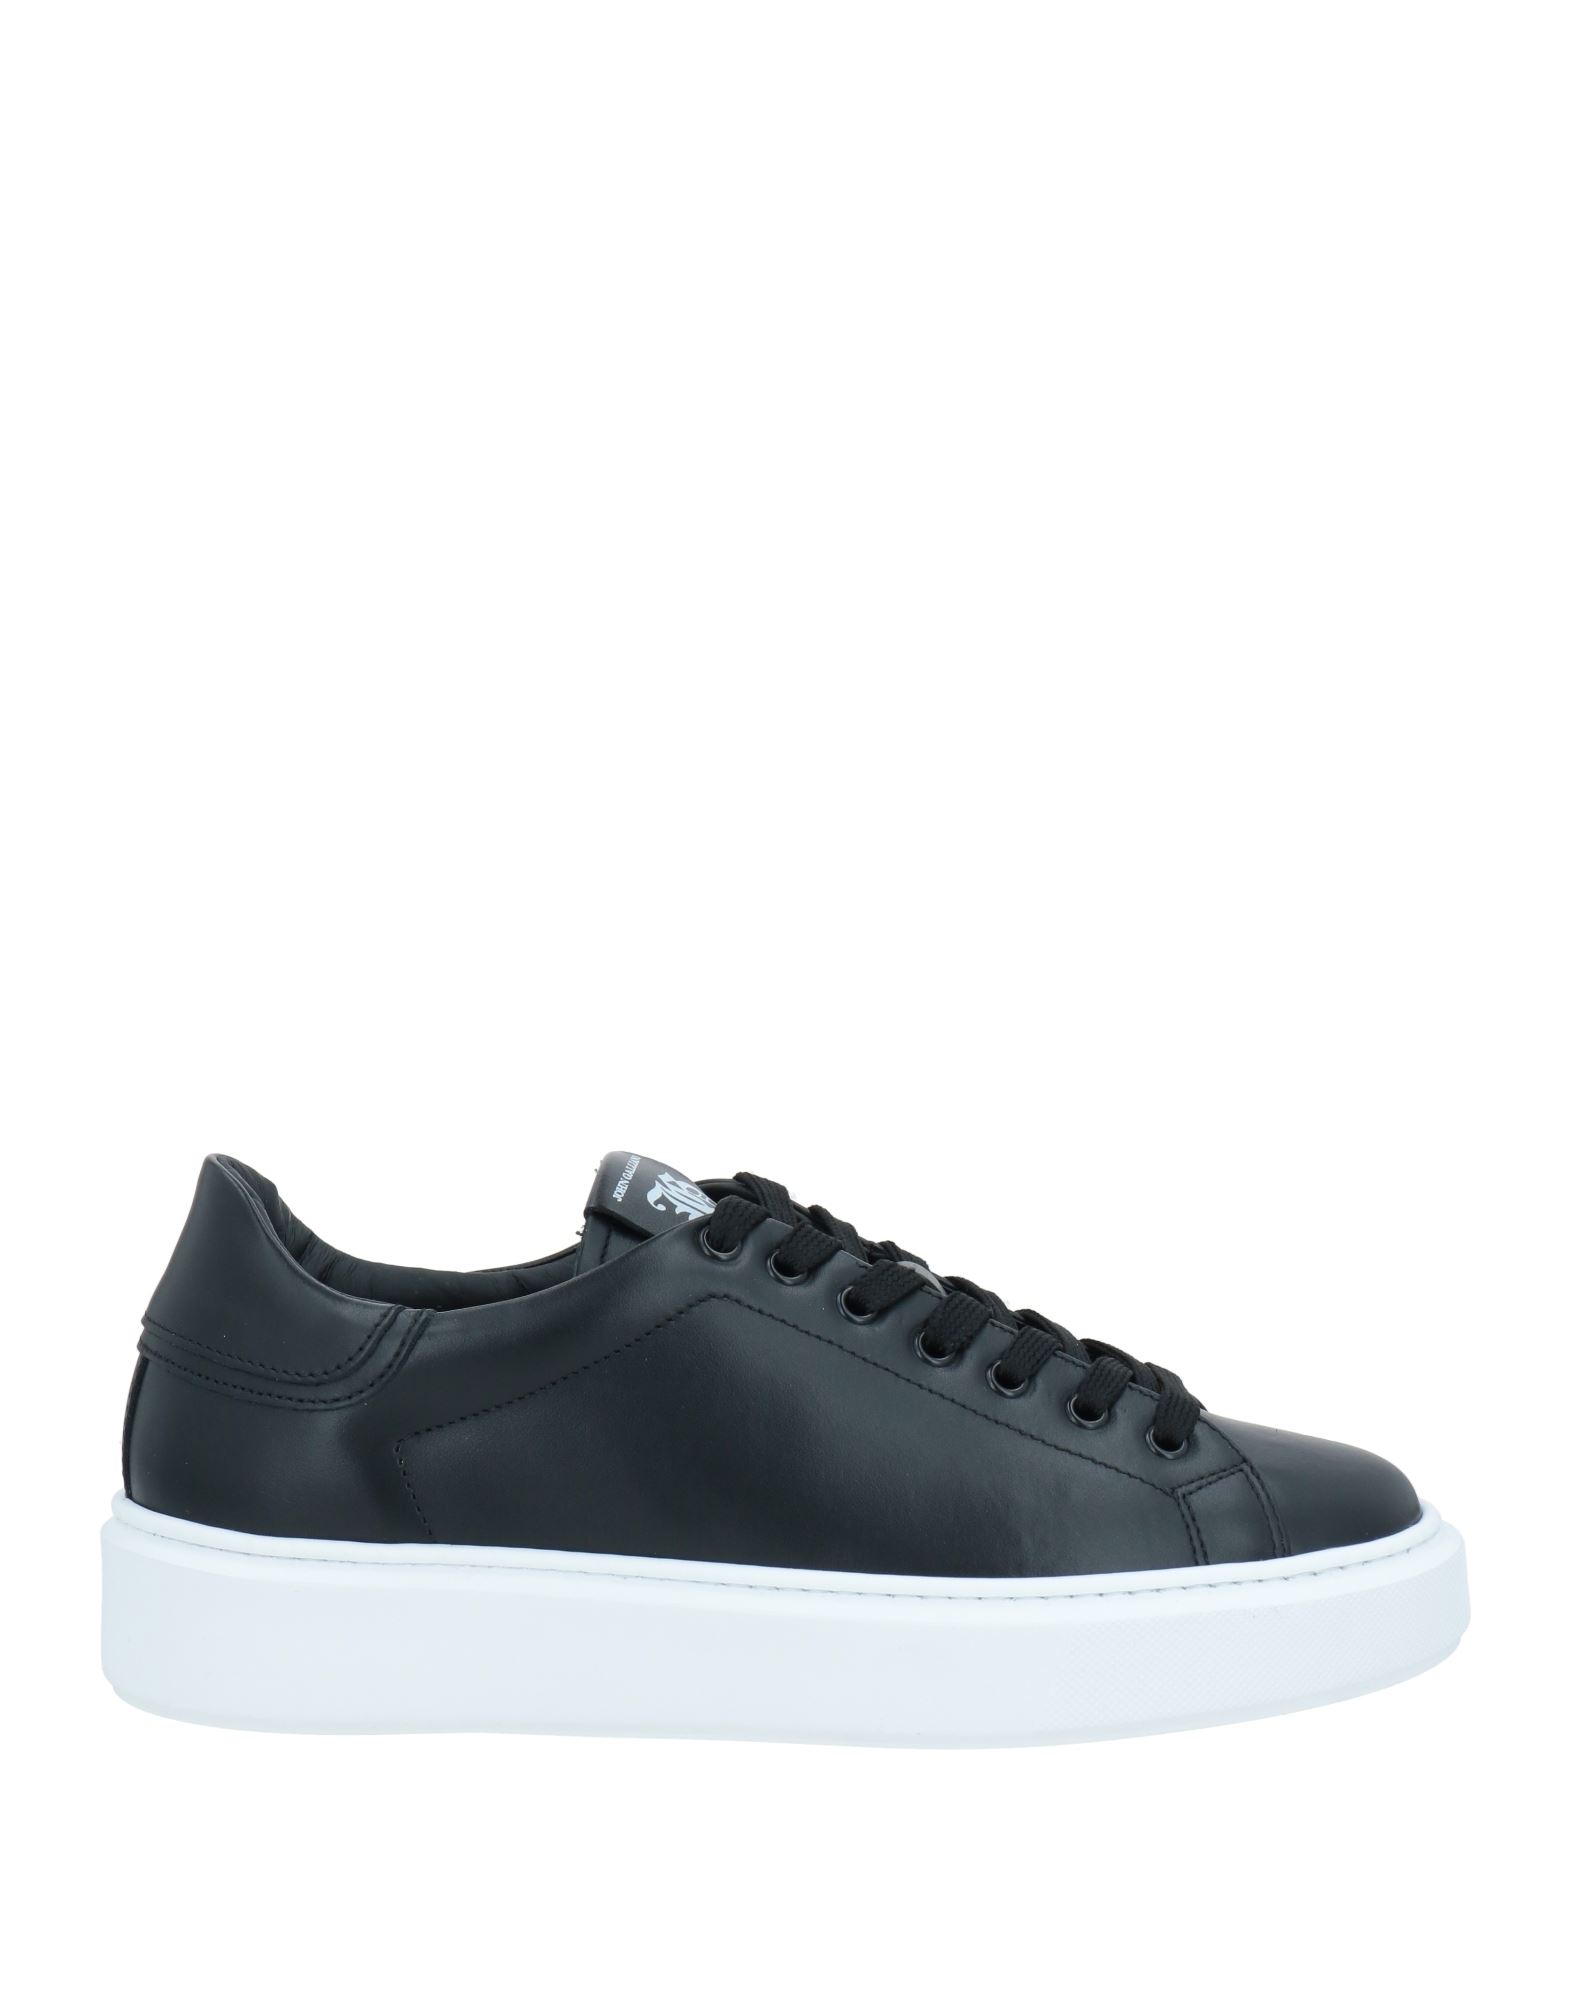 John Galliano Sneakers In Black